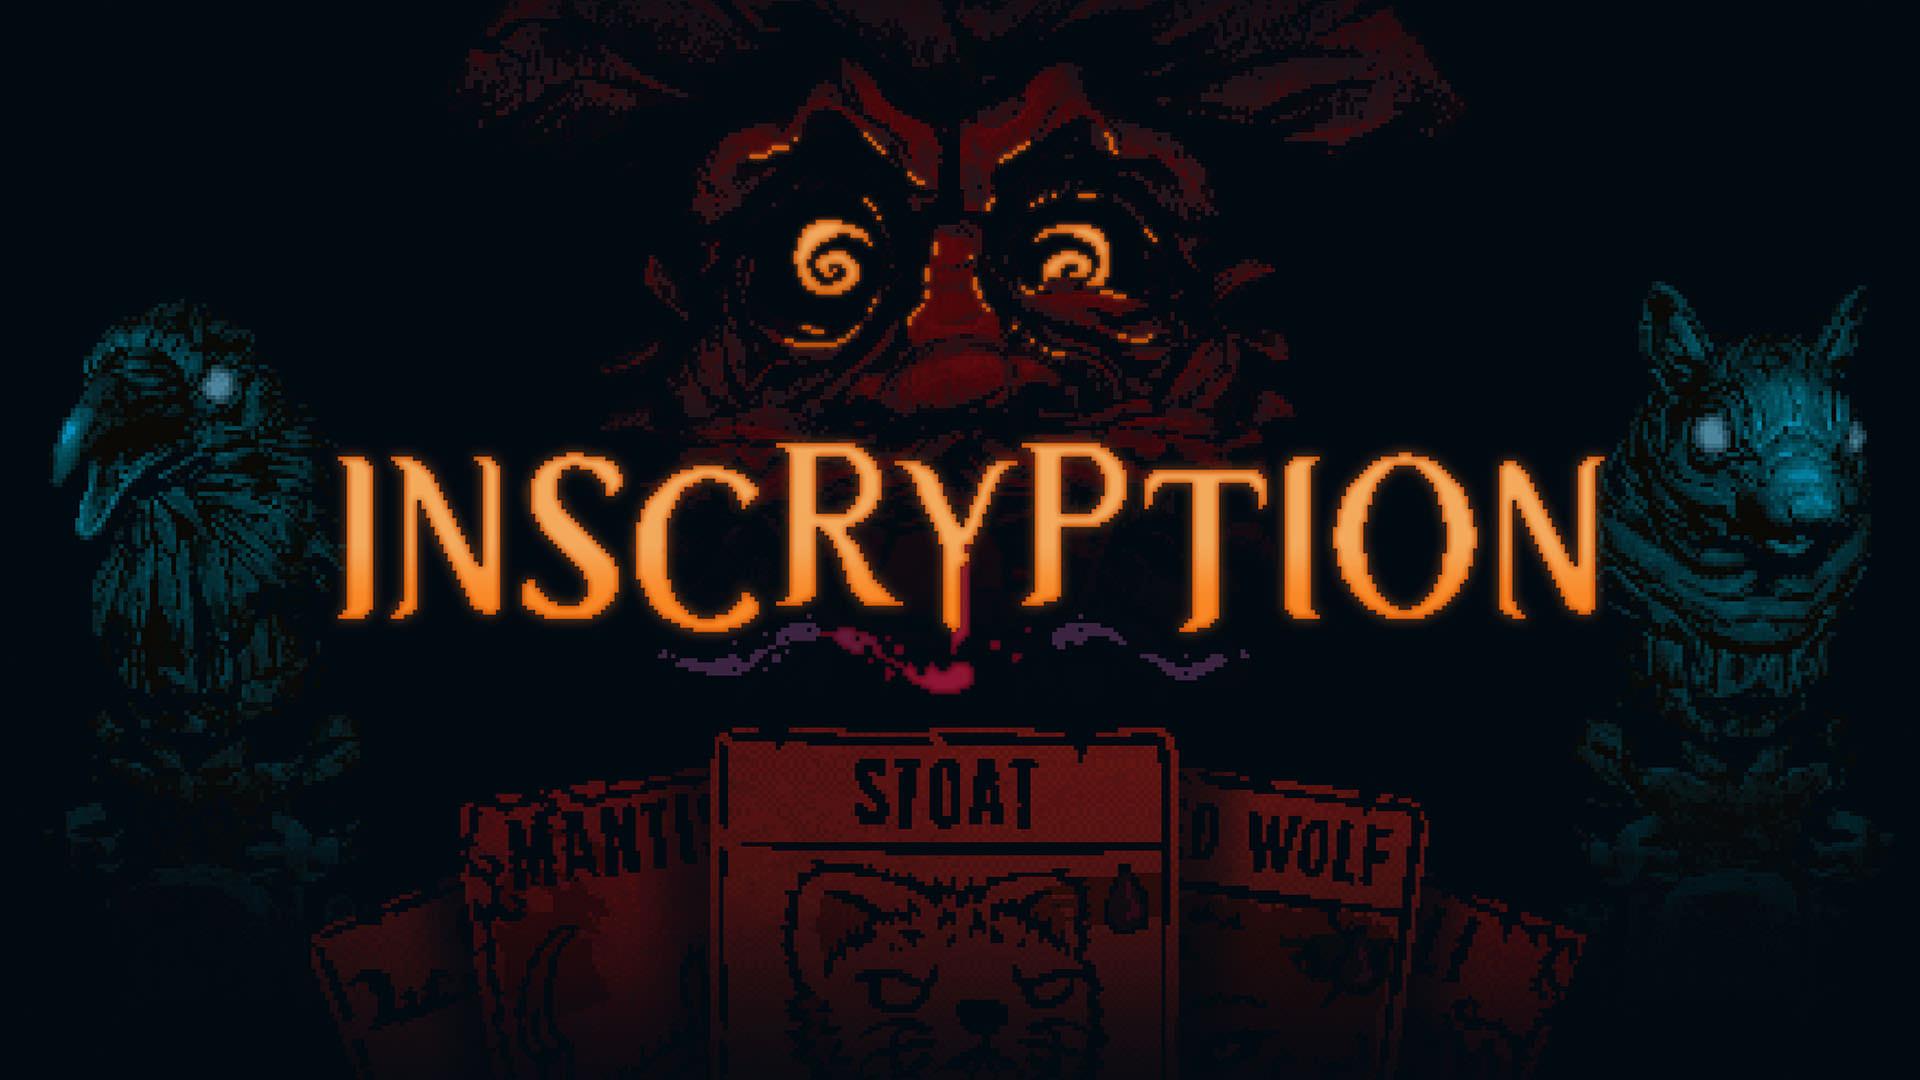 inscryption logo  Image of inscryption logo